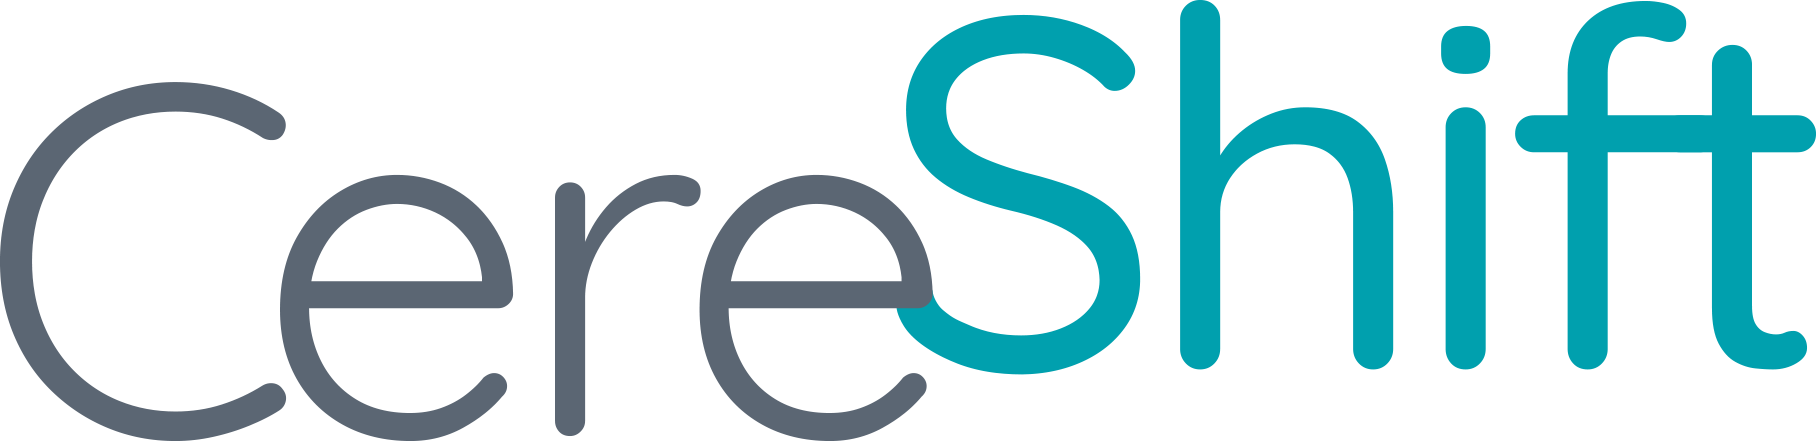 CereShift color logo